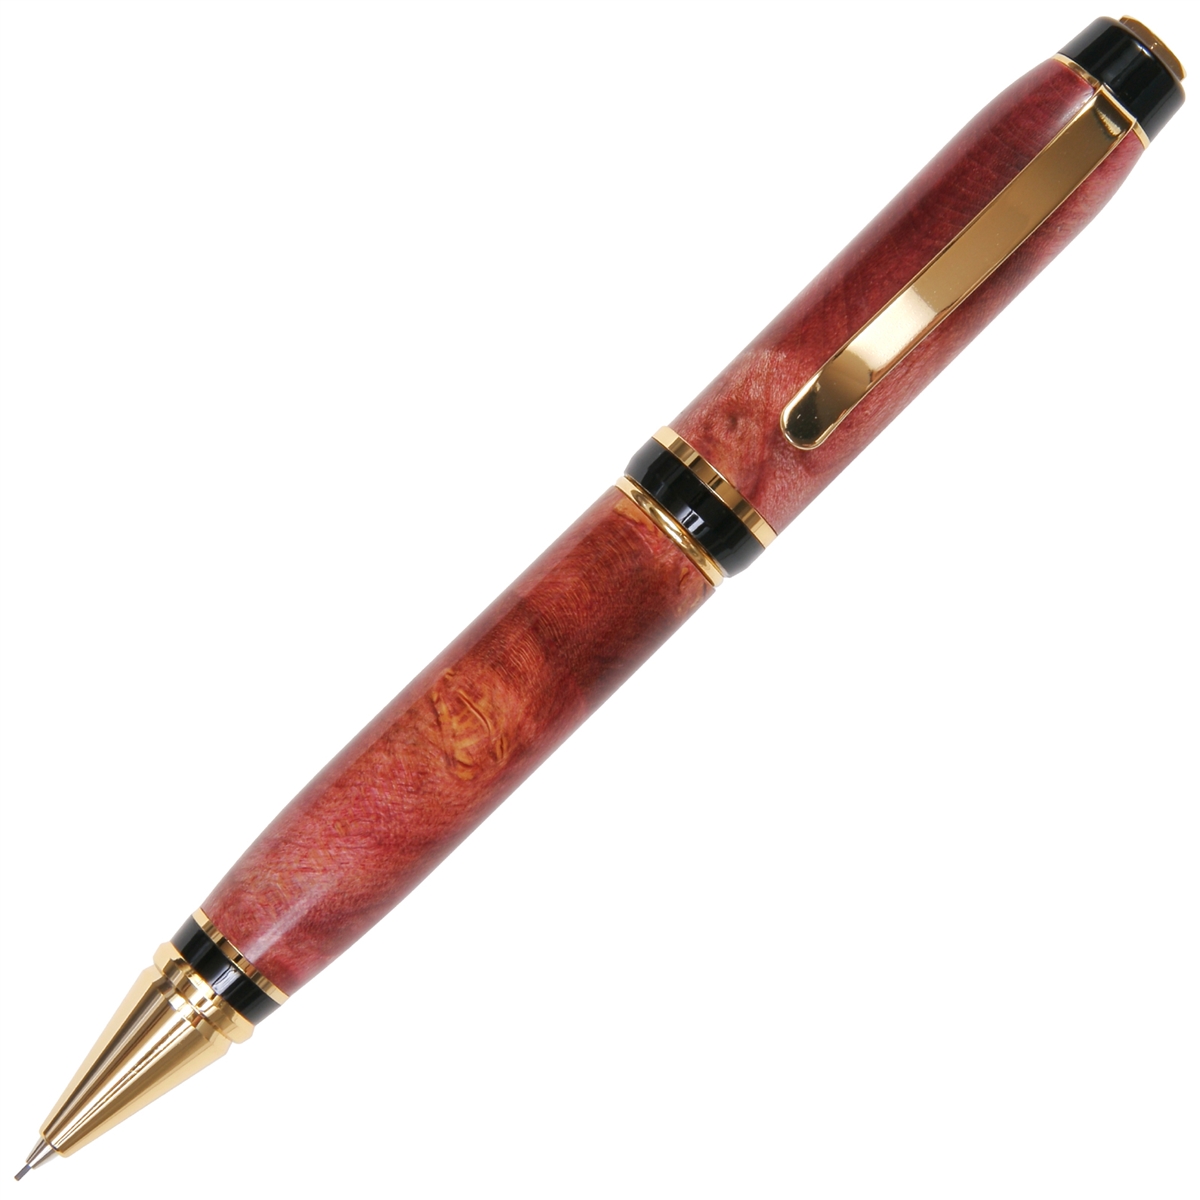 Red Maple Burl Cigar Twist Pencil - Lanier Pens